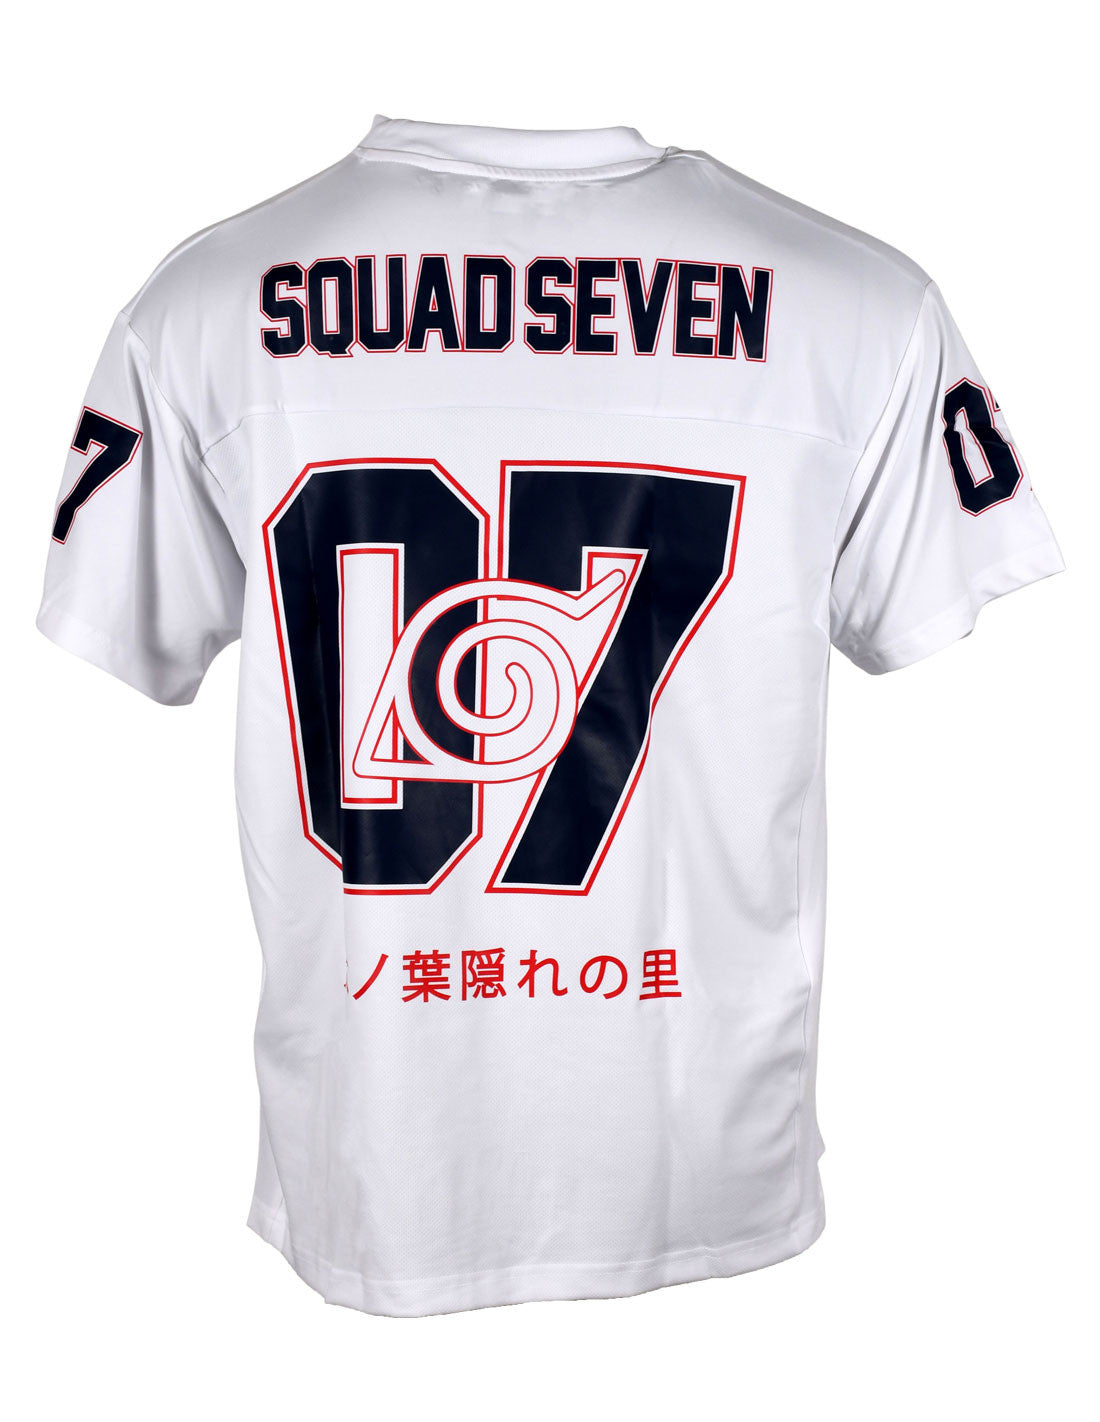 Naruto Sports Tee - Squad Seven 07